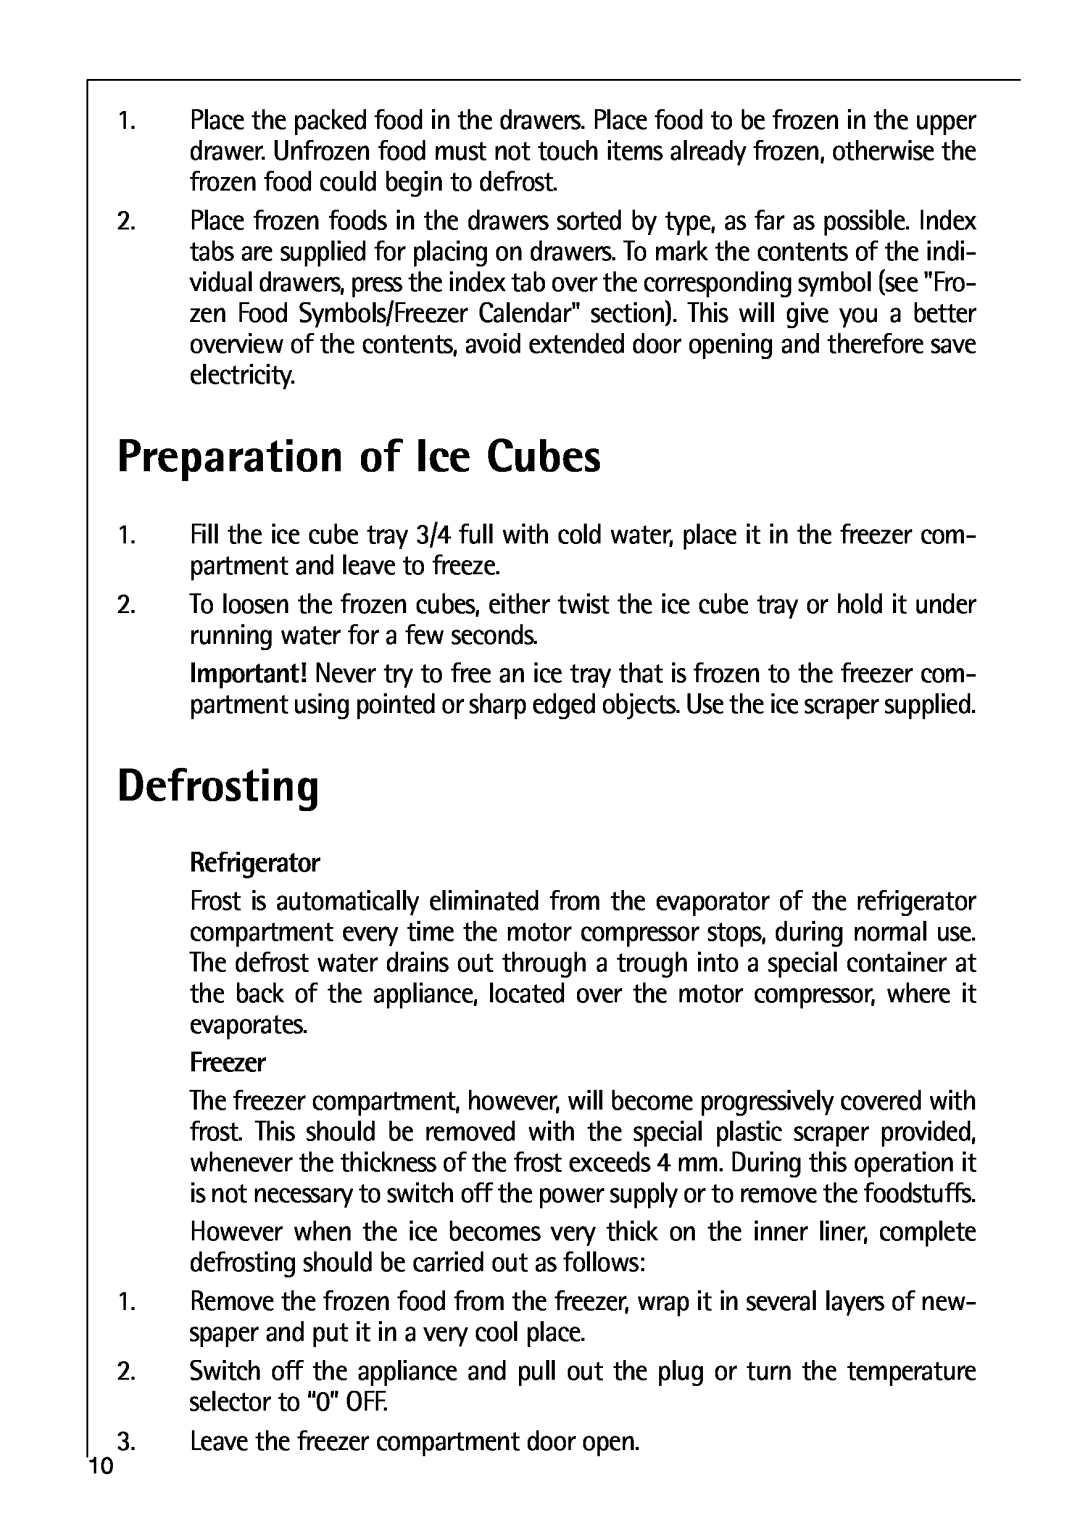 Parkinson Cowan SANTO K 18, SANTO K 9, SANTO K 40-5i user manual Preparation of Ice Cubes, Defrosting, Refrigerator, Freezer 